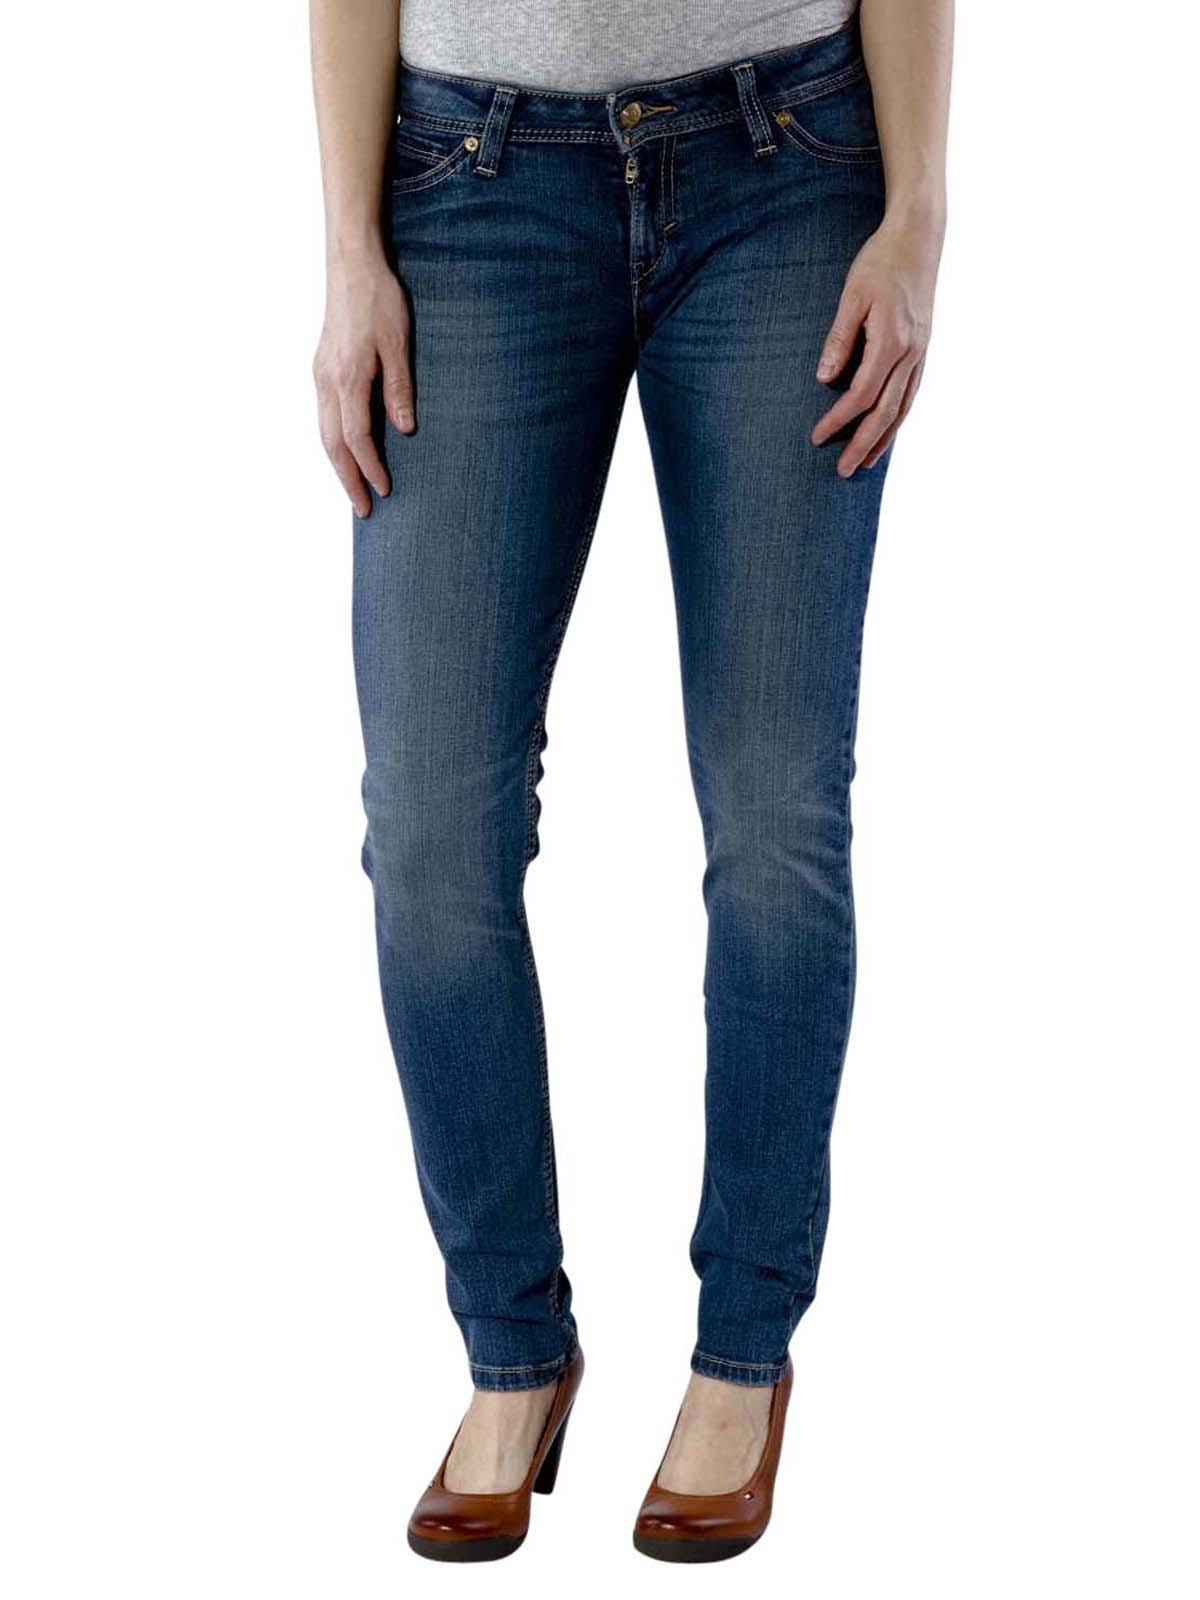 levi bold curve jeans